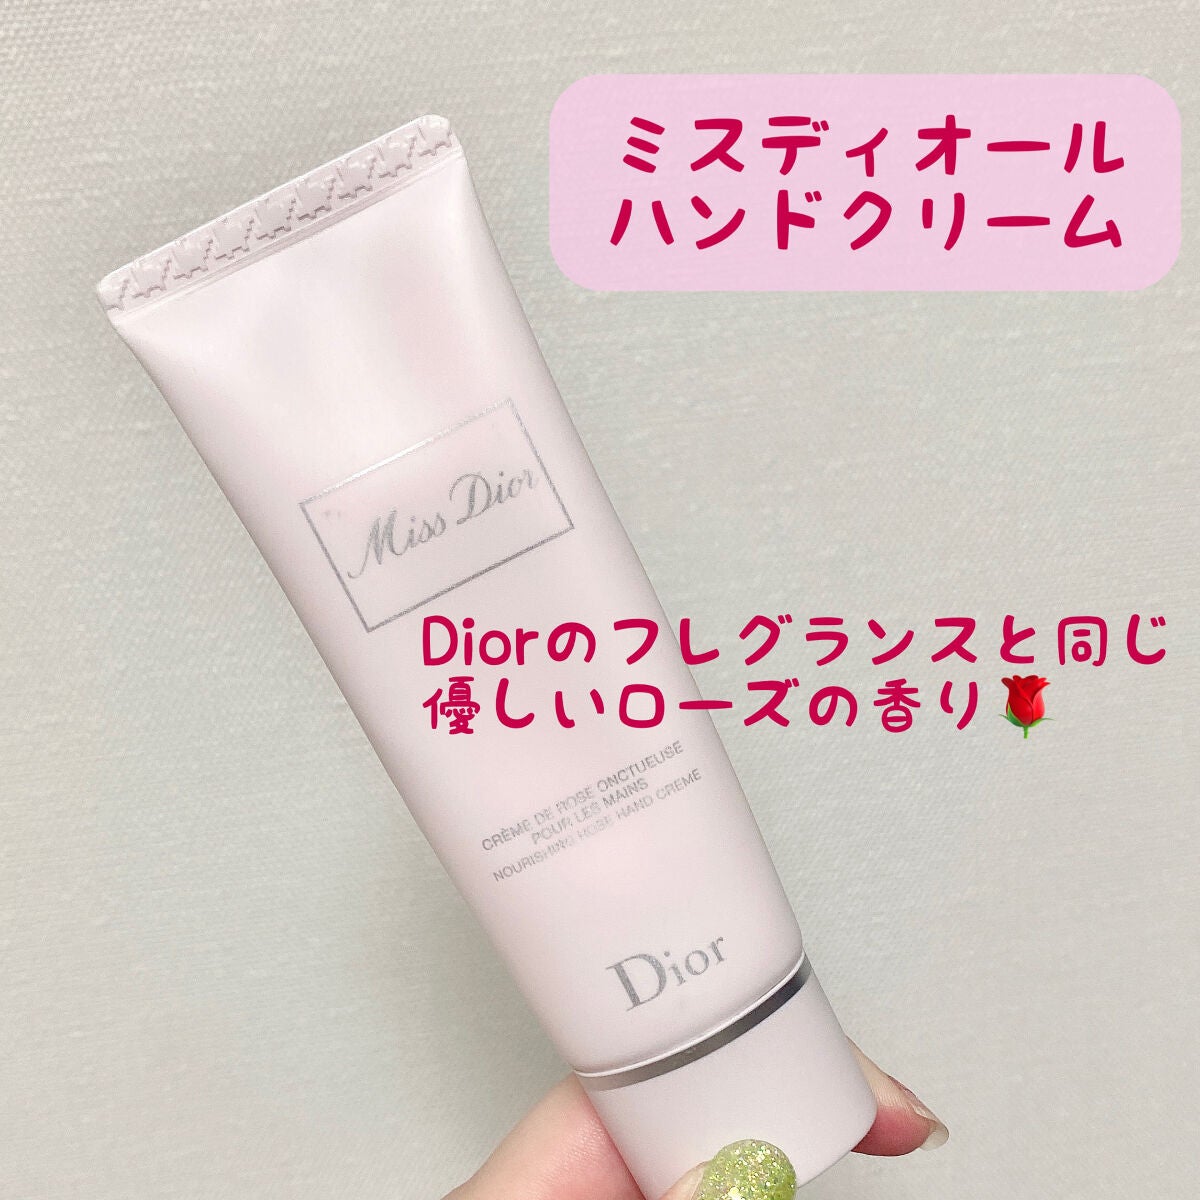 Dior ハンドクリーム